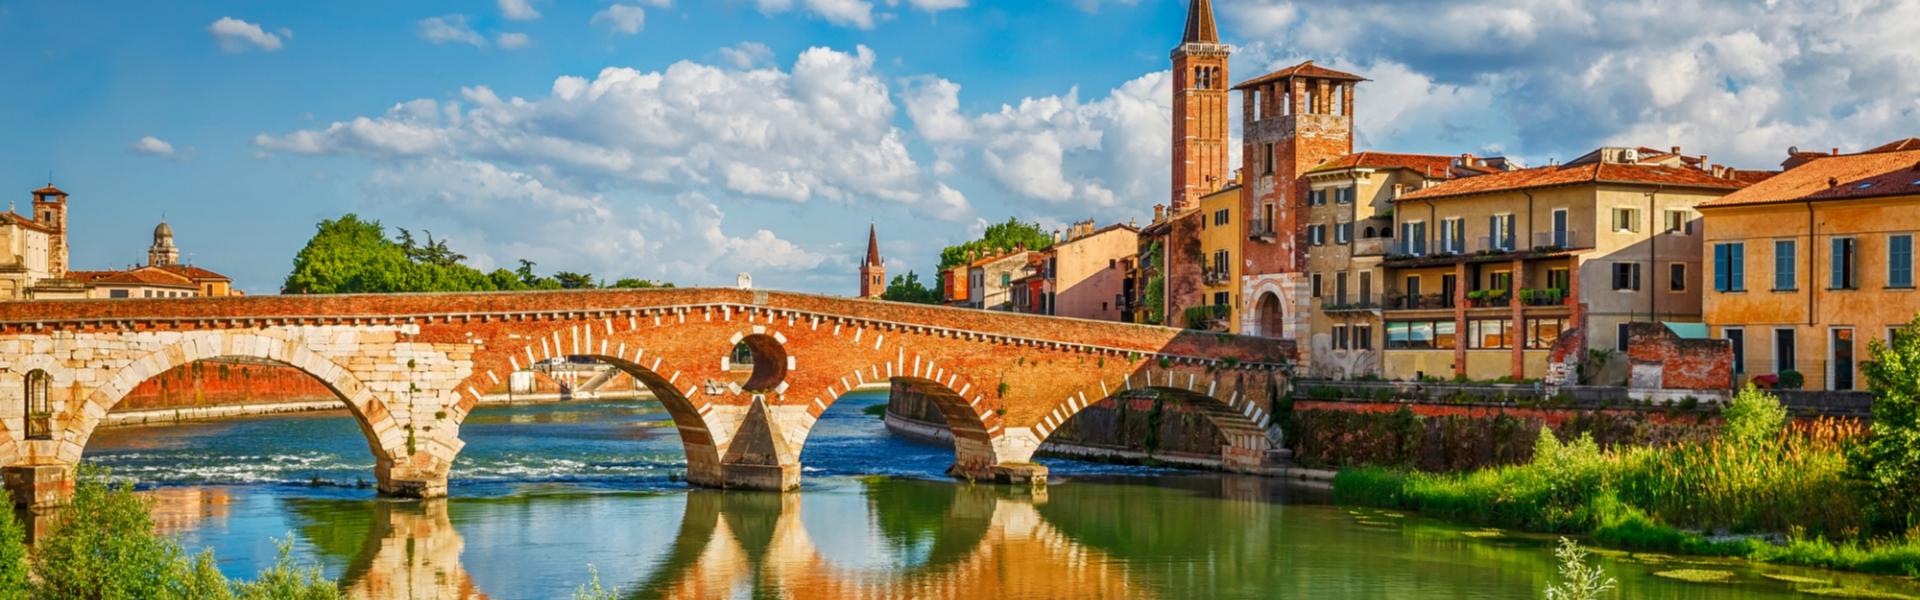 Casa vacanza Verona: Vivete una storia romantica - Casamundo